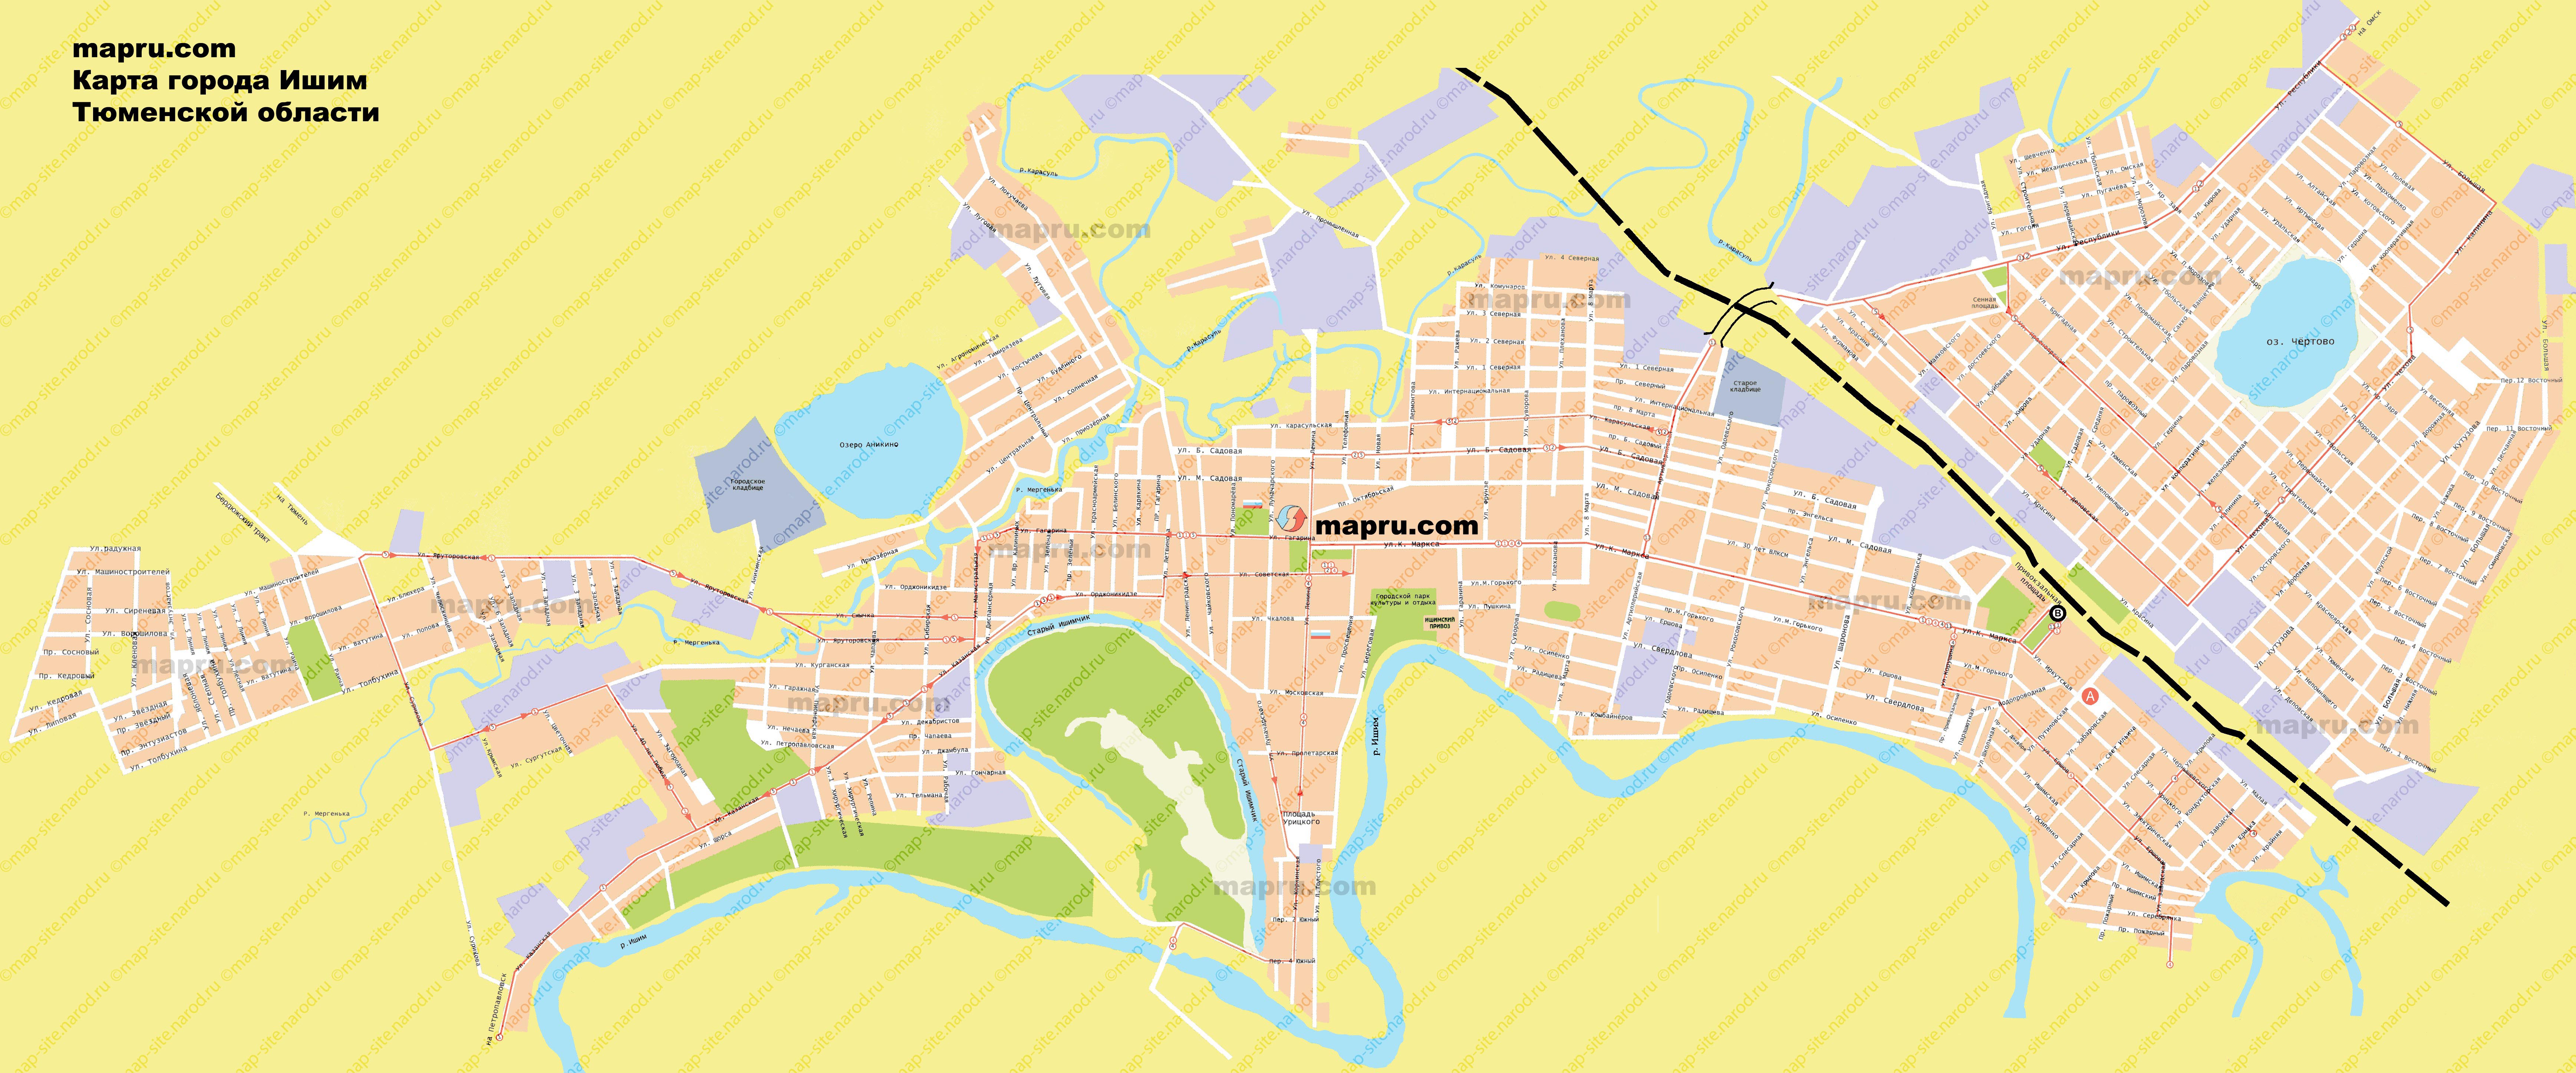 Ишим какой район. Ишим город на карте. Карта города Ишима Тюменской области с улицами. Ишим Тюменская область на карте России. Карта города Ишима с улицами.